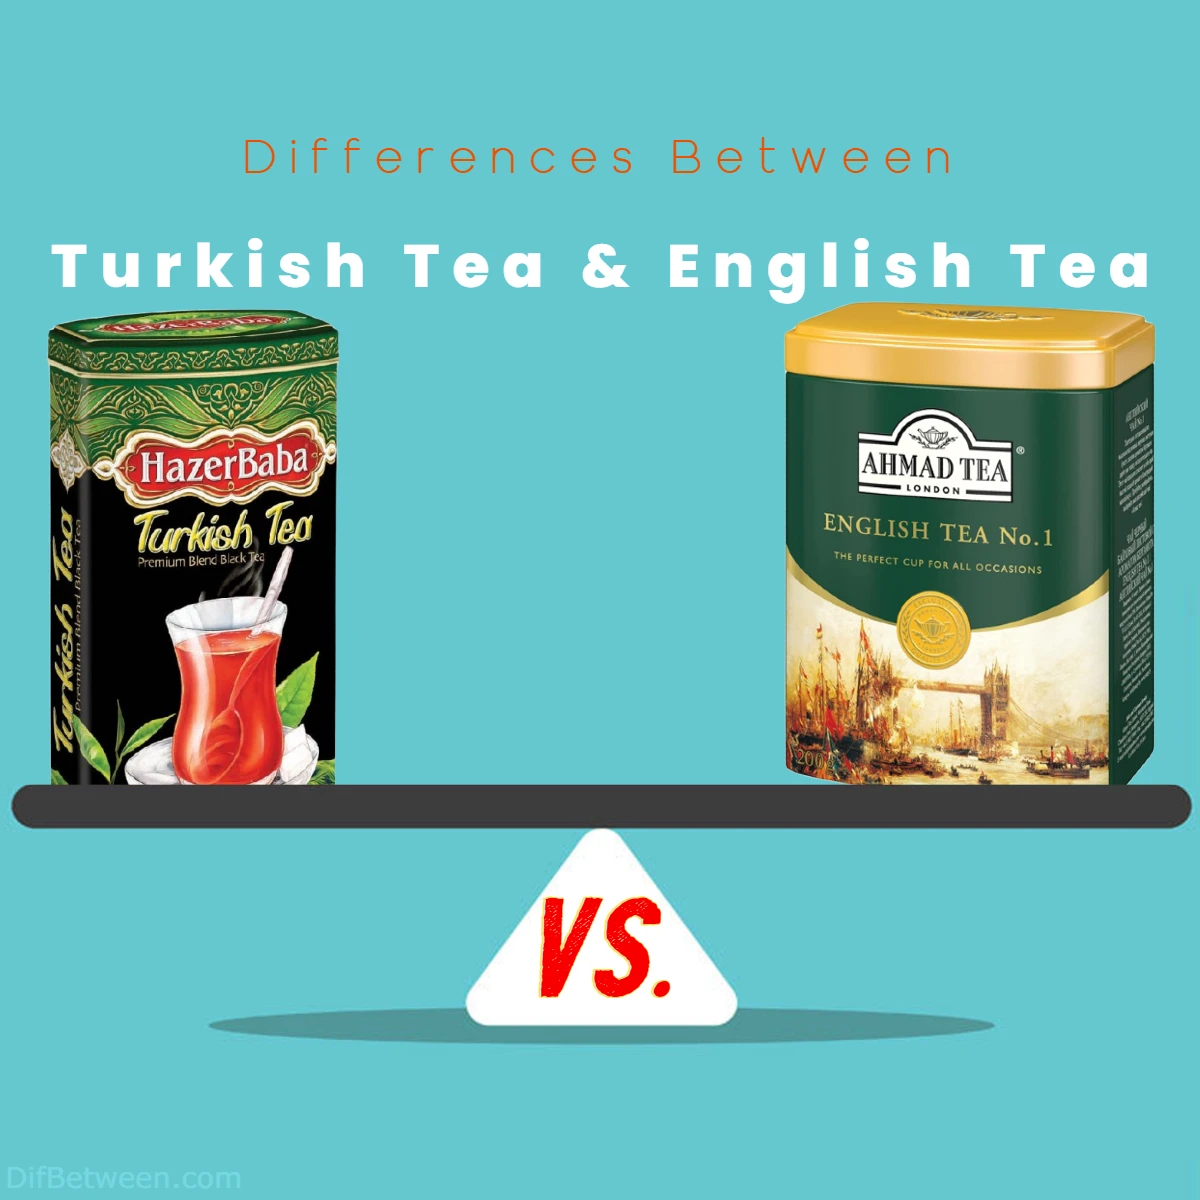 Differences Between Turkish Tea vs English Tea